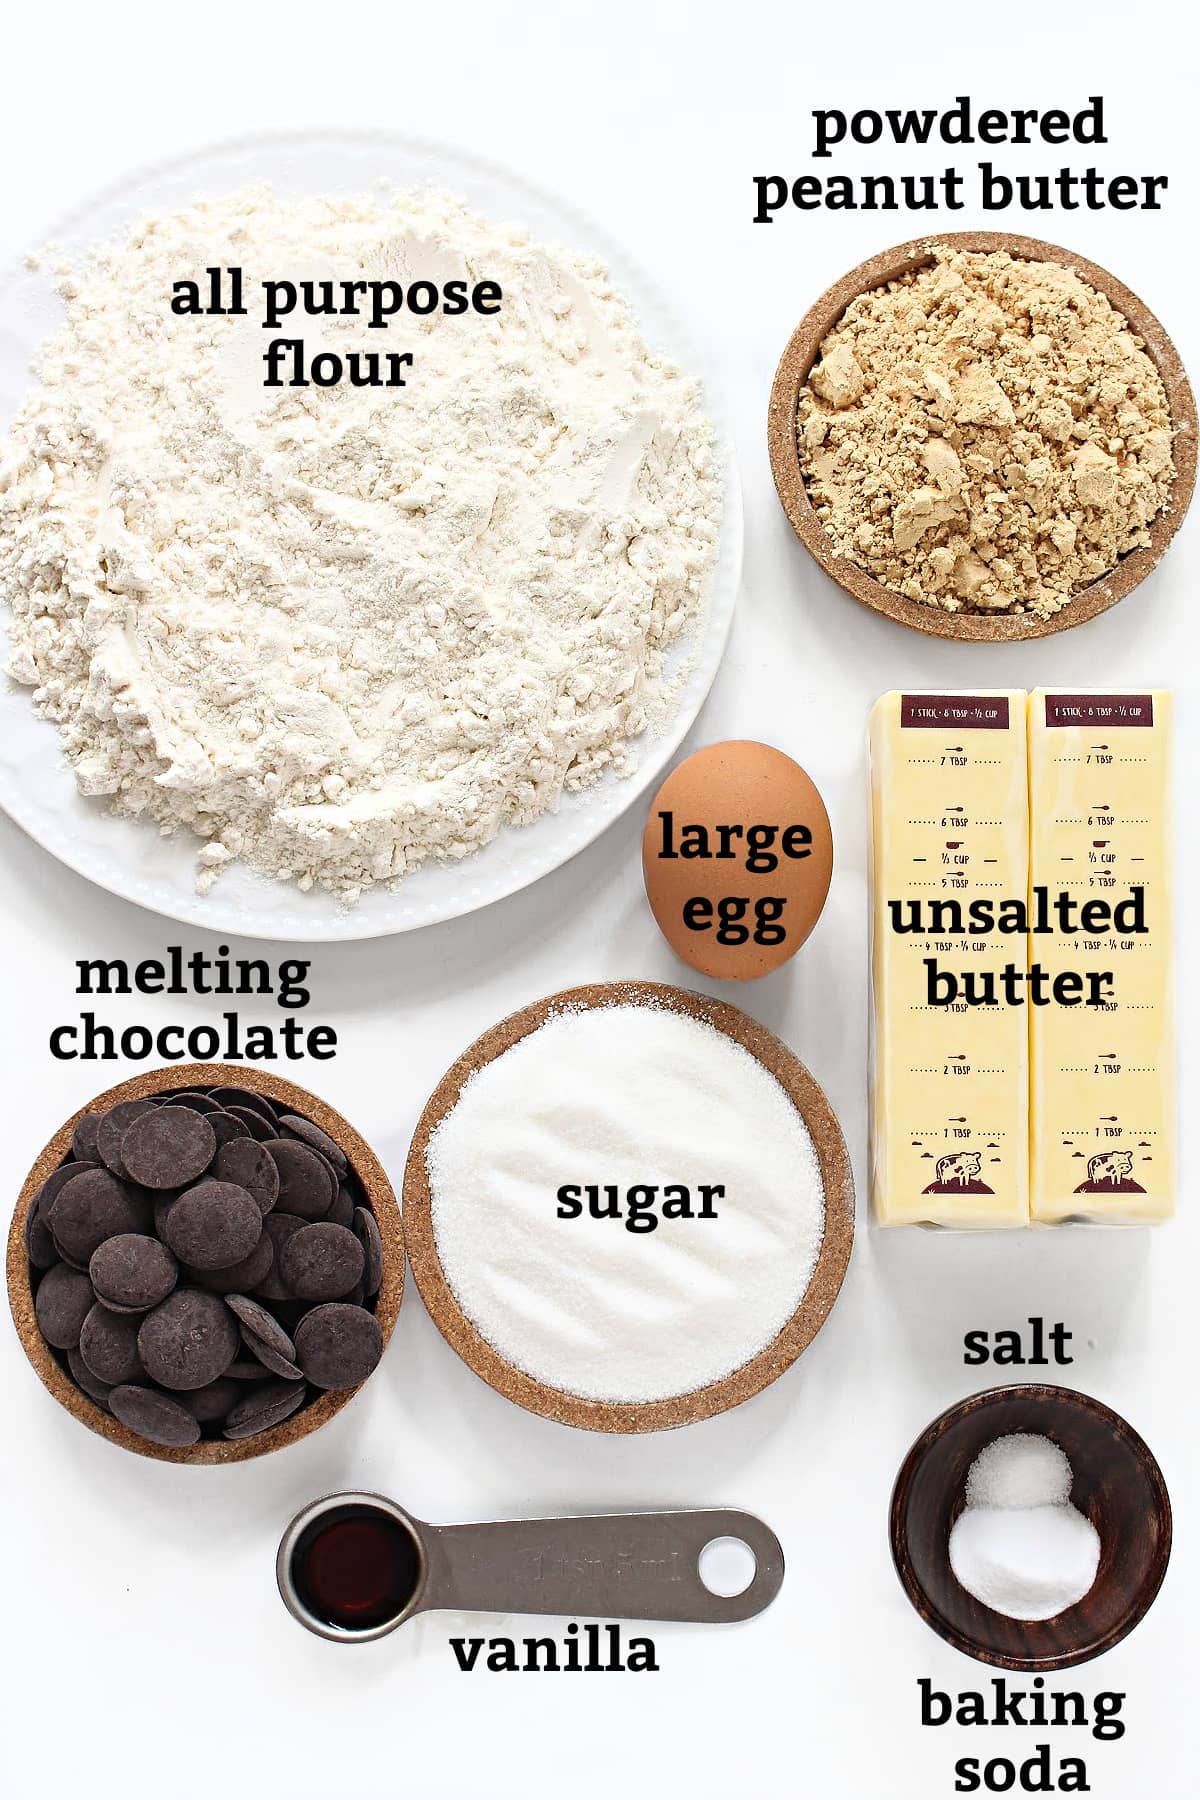 Ingredients: flour, powdered peanut butter, butter, egg, sugar, vanilla, baking soda, melting chocolate.